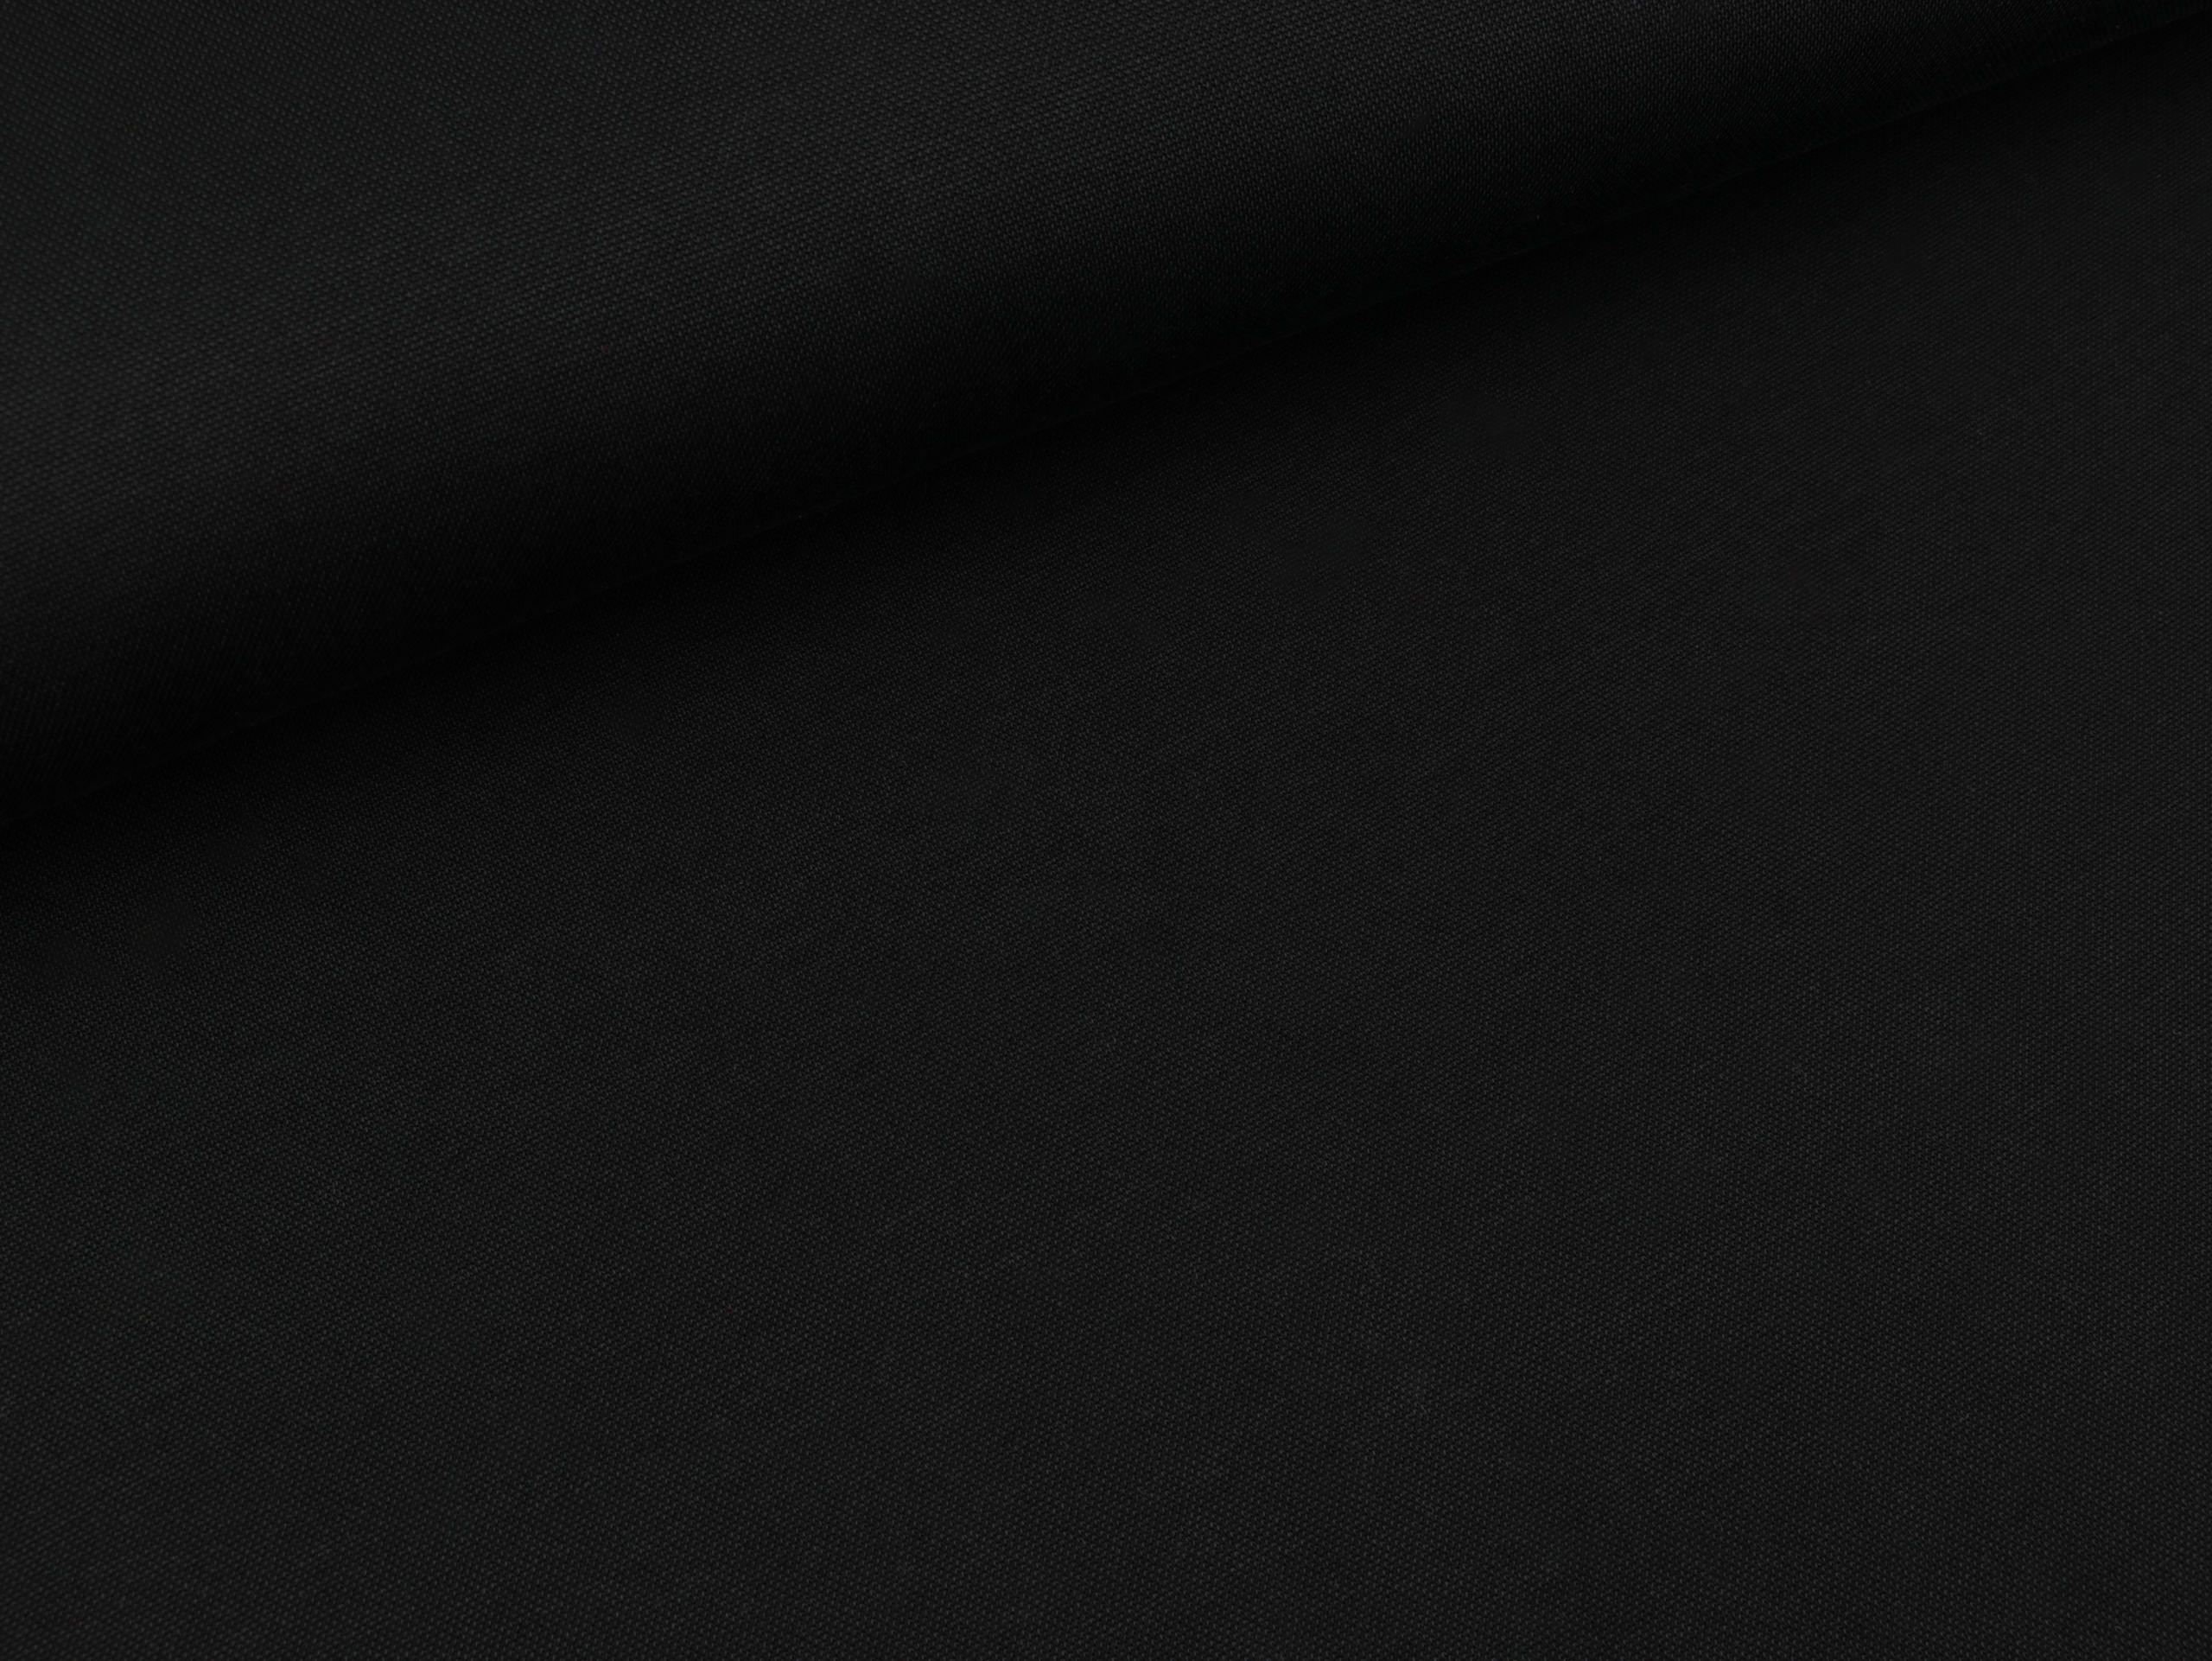 Modal Double Knit black by MeetMILK 29.90 EUR / meter | Etsy